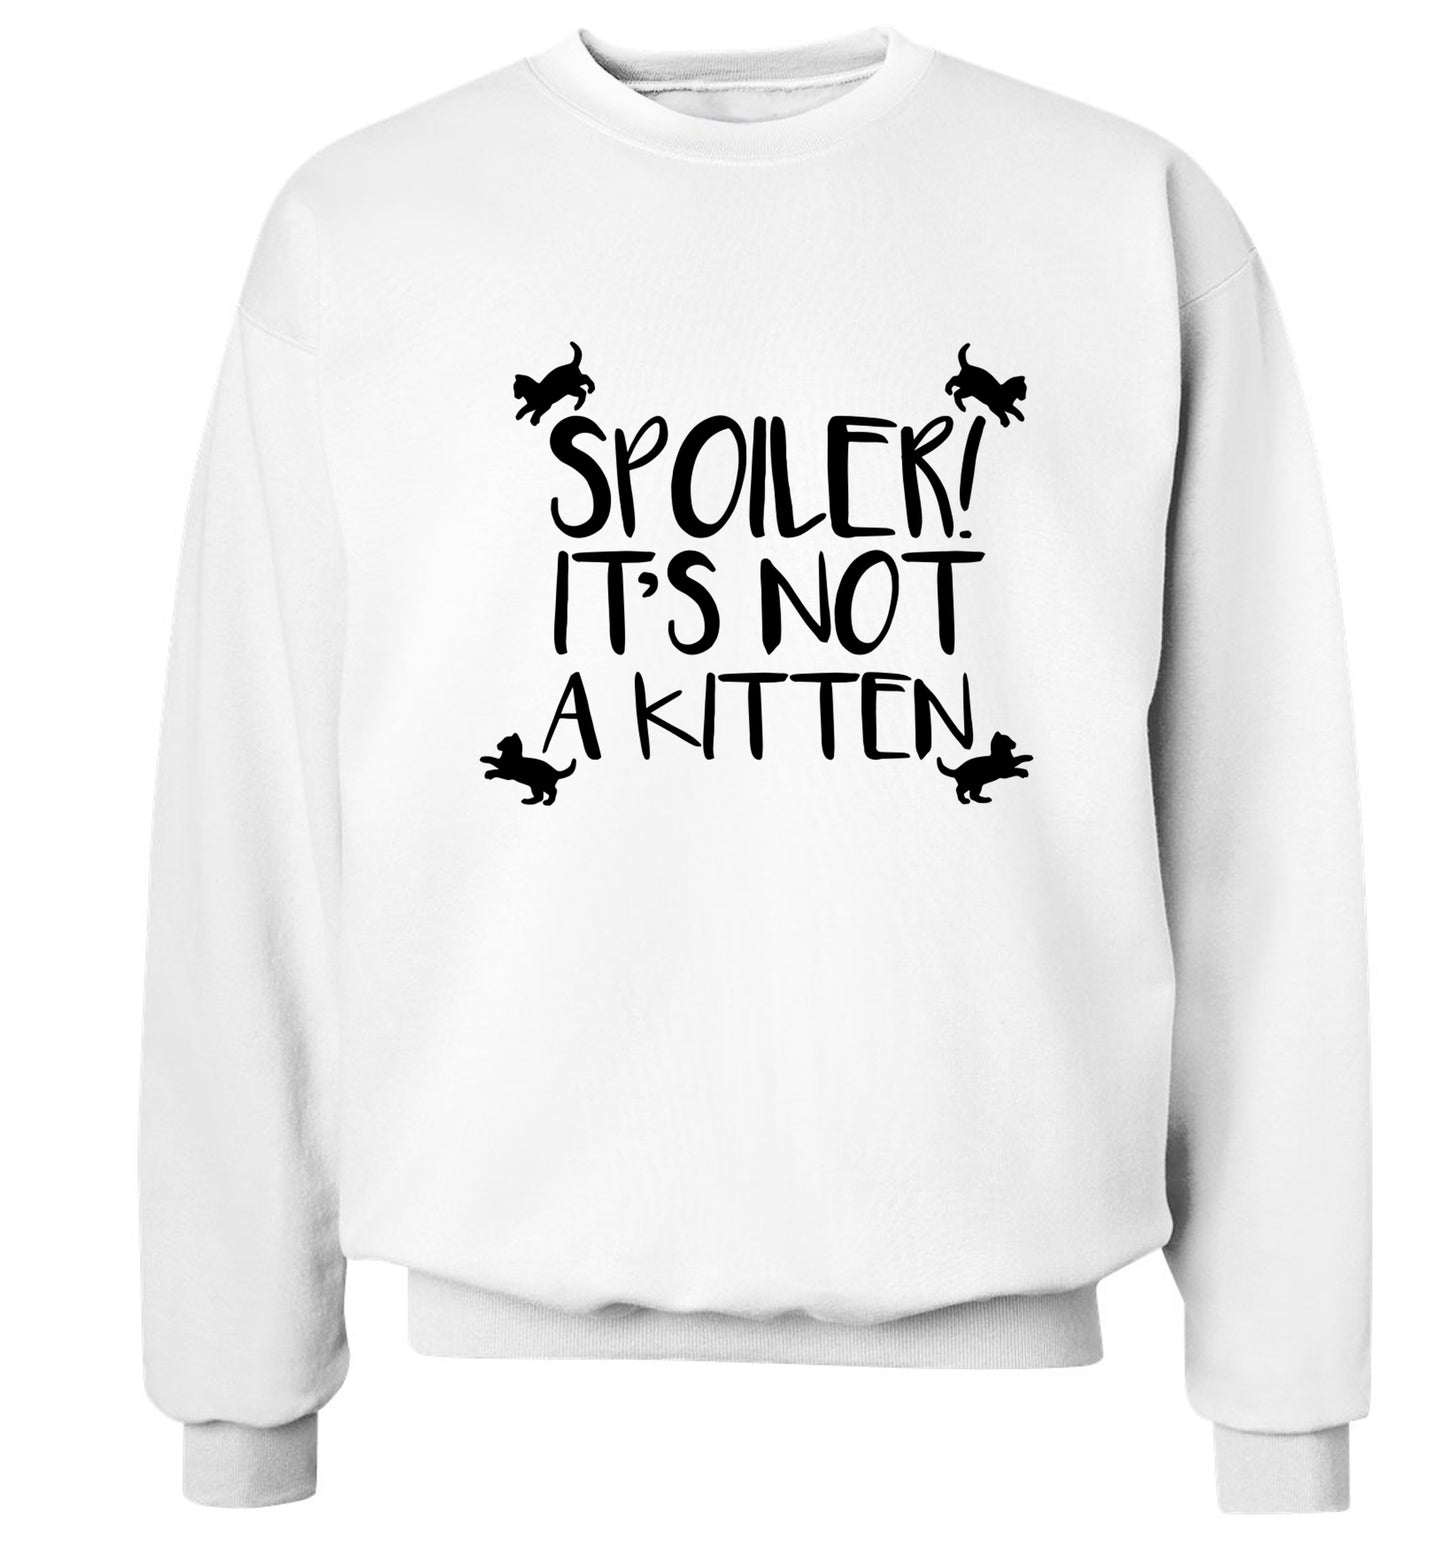 Spoiler it's not a kitten Adult's unisex white Sweater 2XL